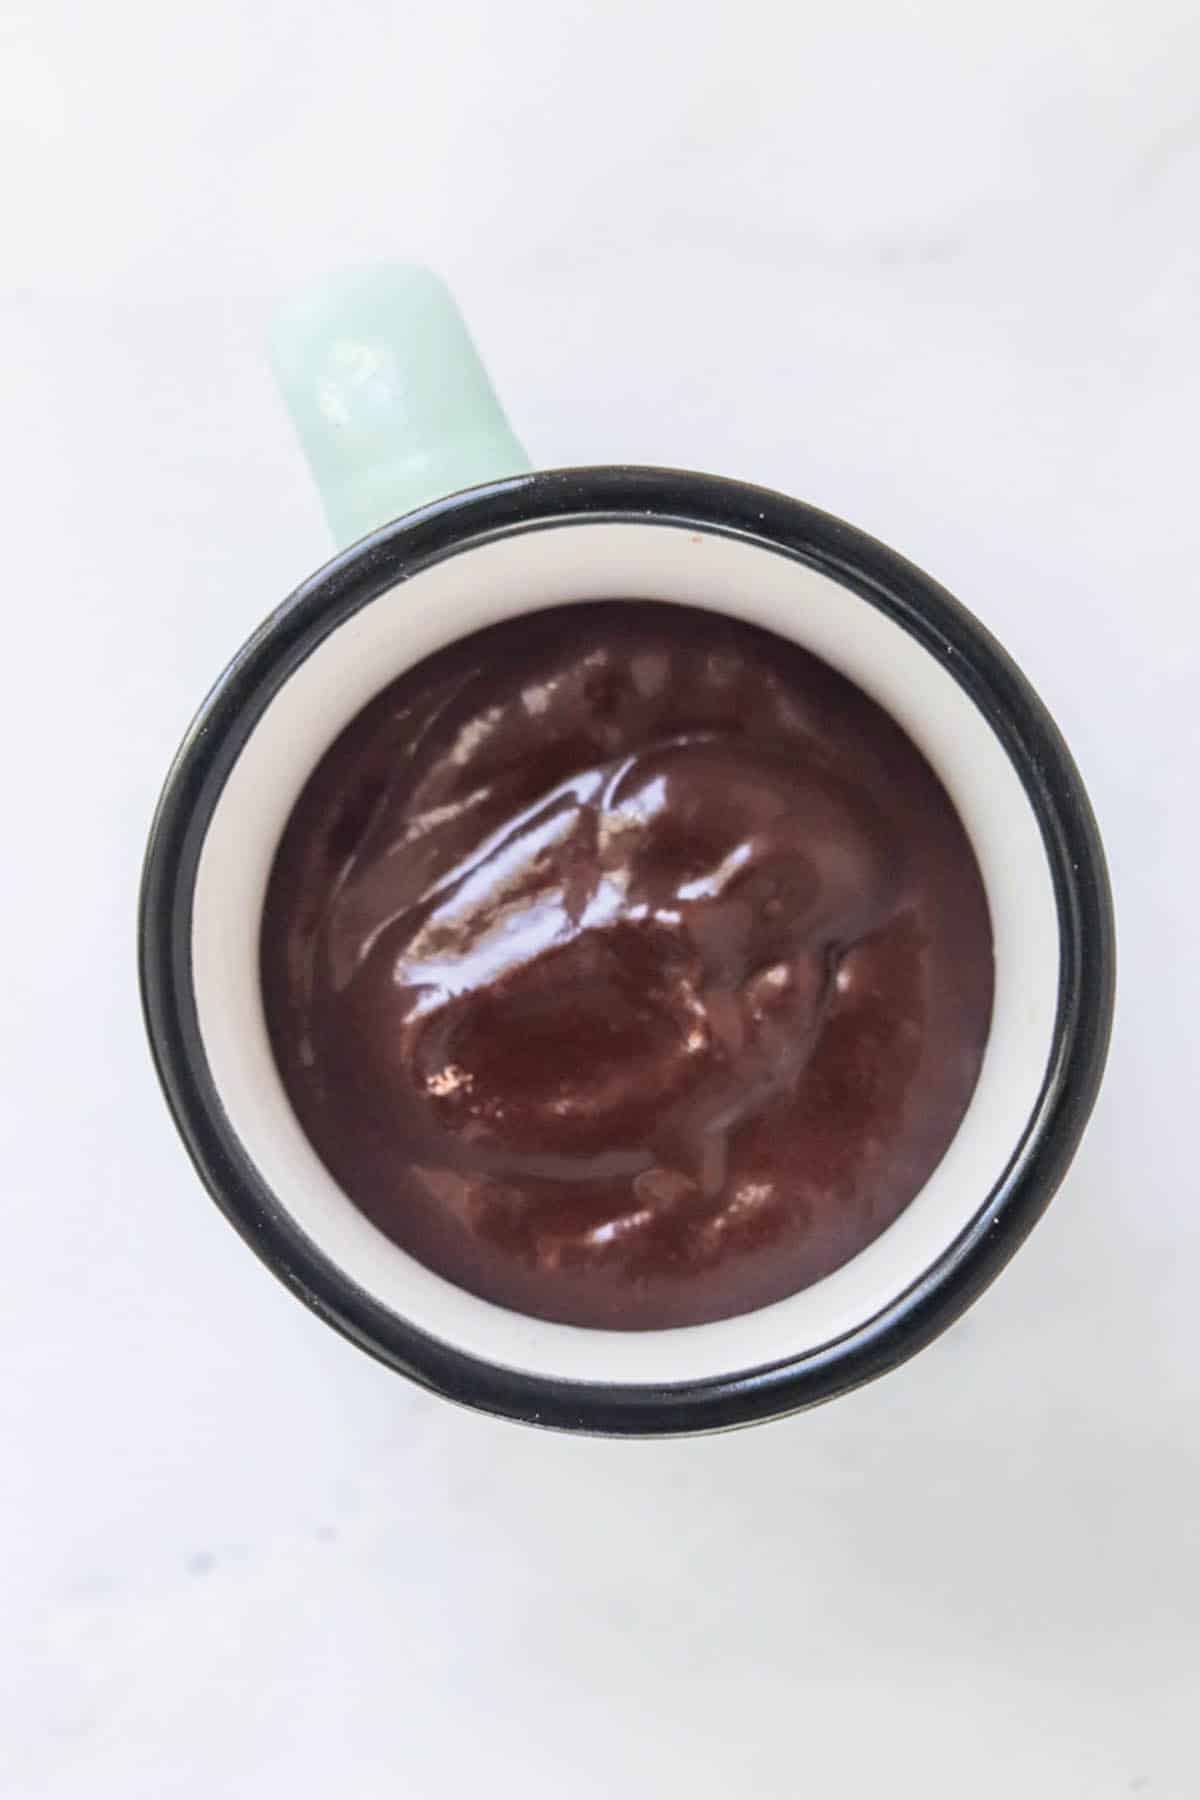 Chocolate cake batter in a mug.